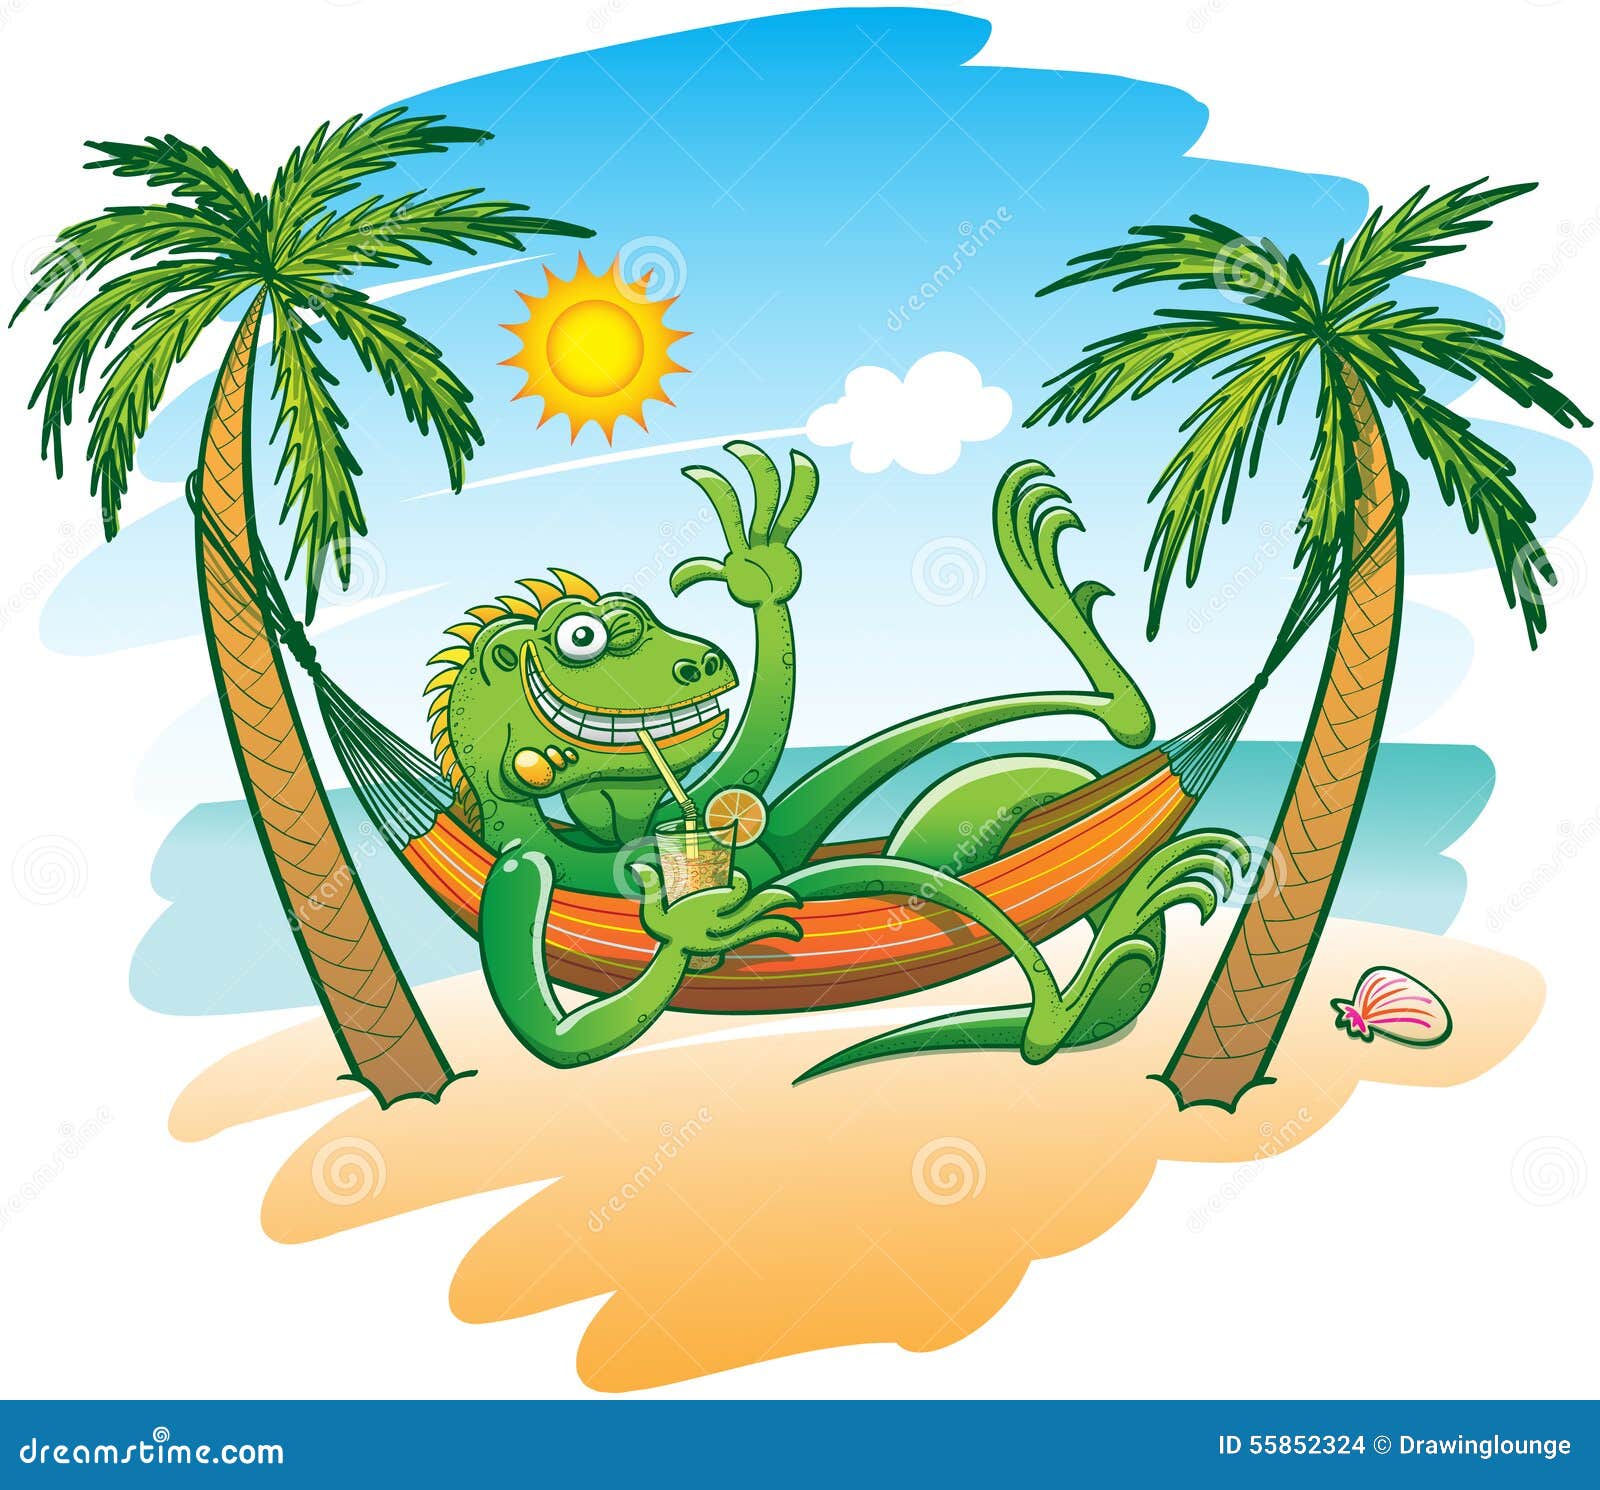 cool iguana enjoying holidays in a hammock on the beach